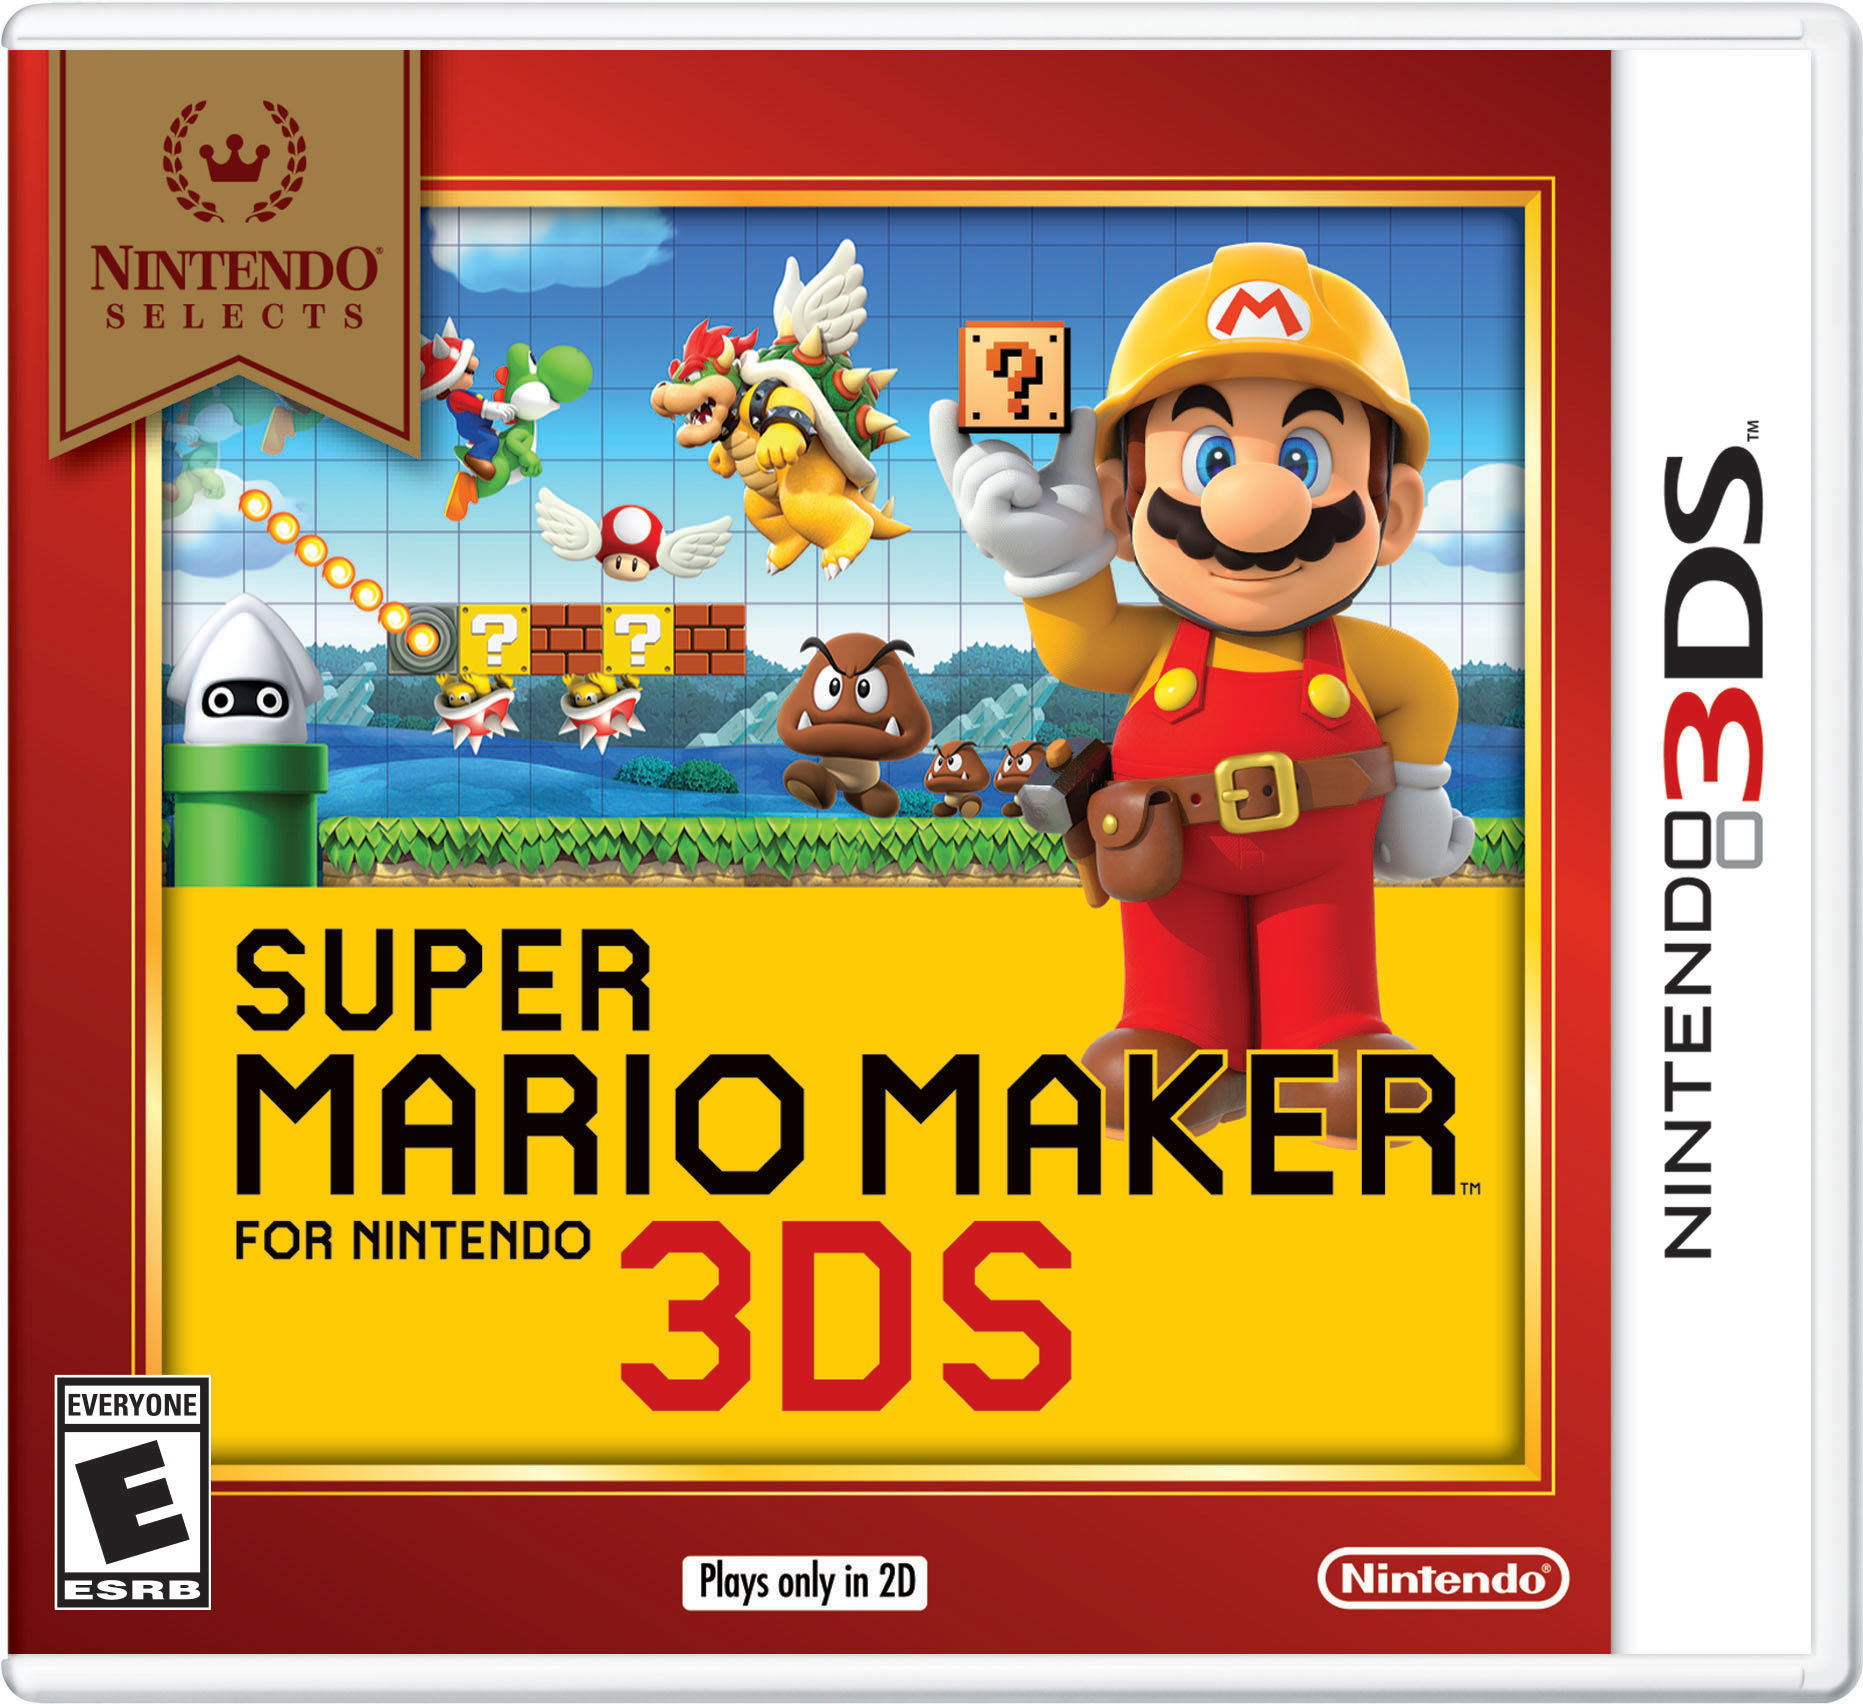 Nintendo Selects: Star Fox 64 3D - Nintendo 3DS 